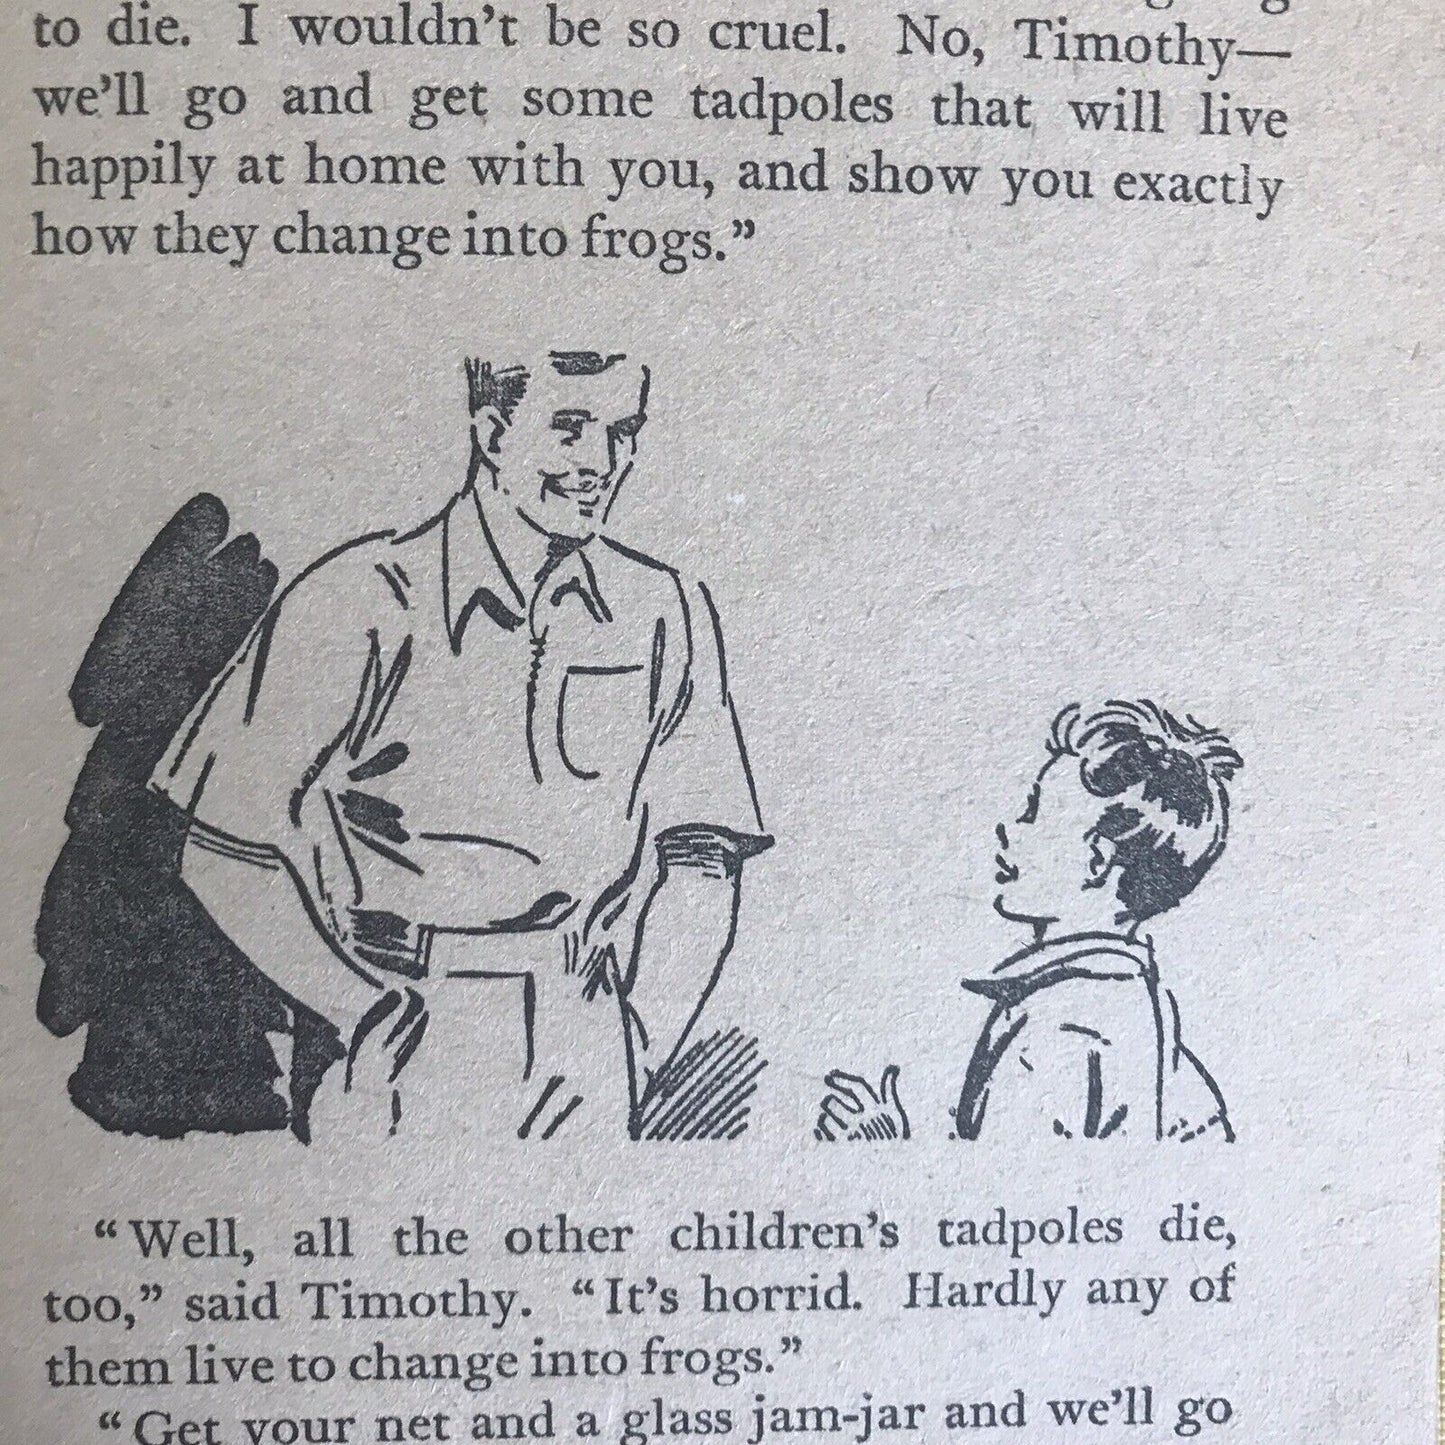 1964 Tales After Tea By Enid Blyton (Collins Pub)